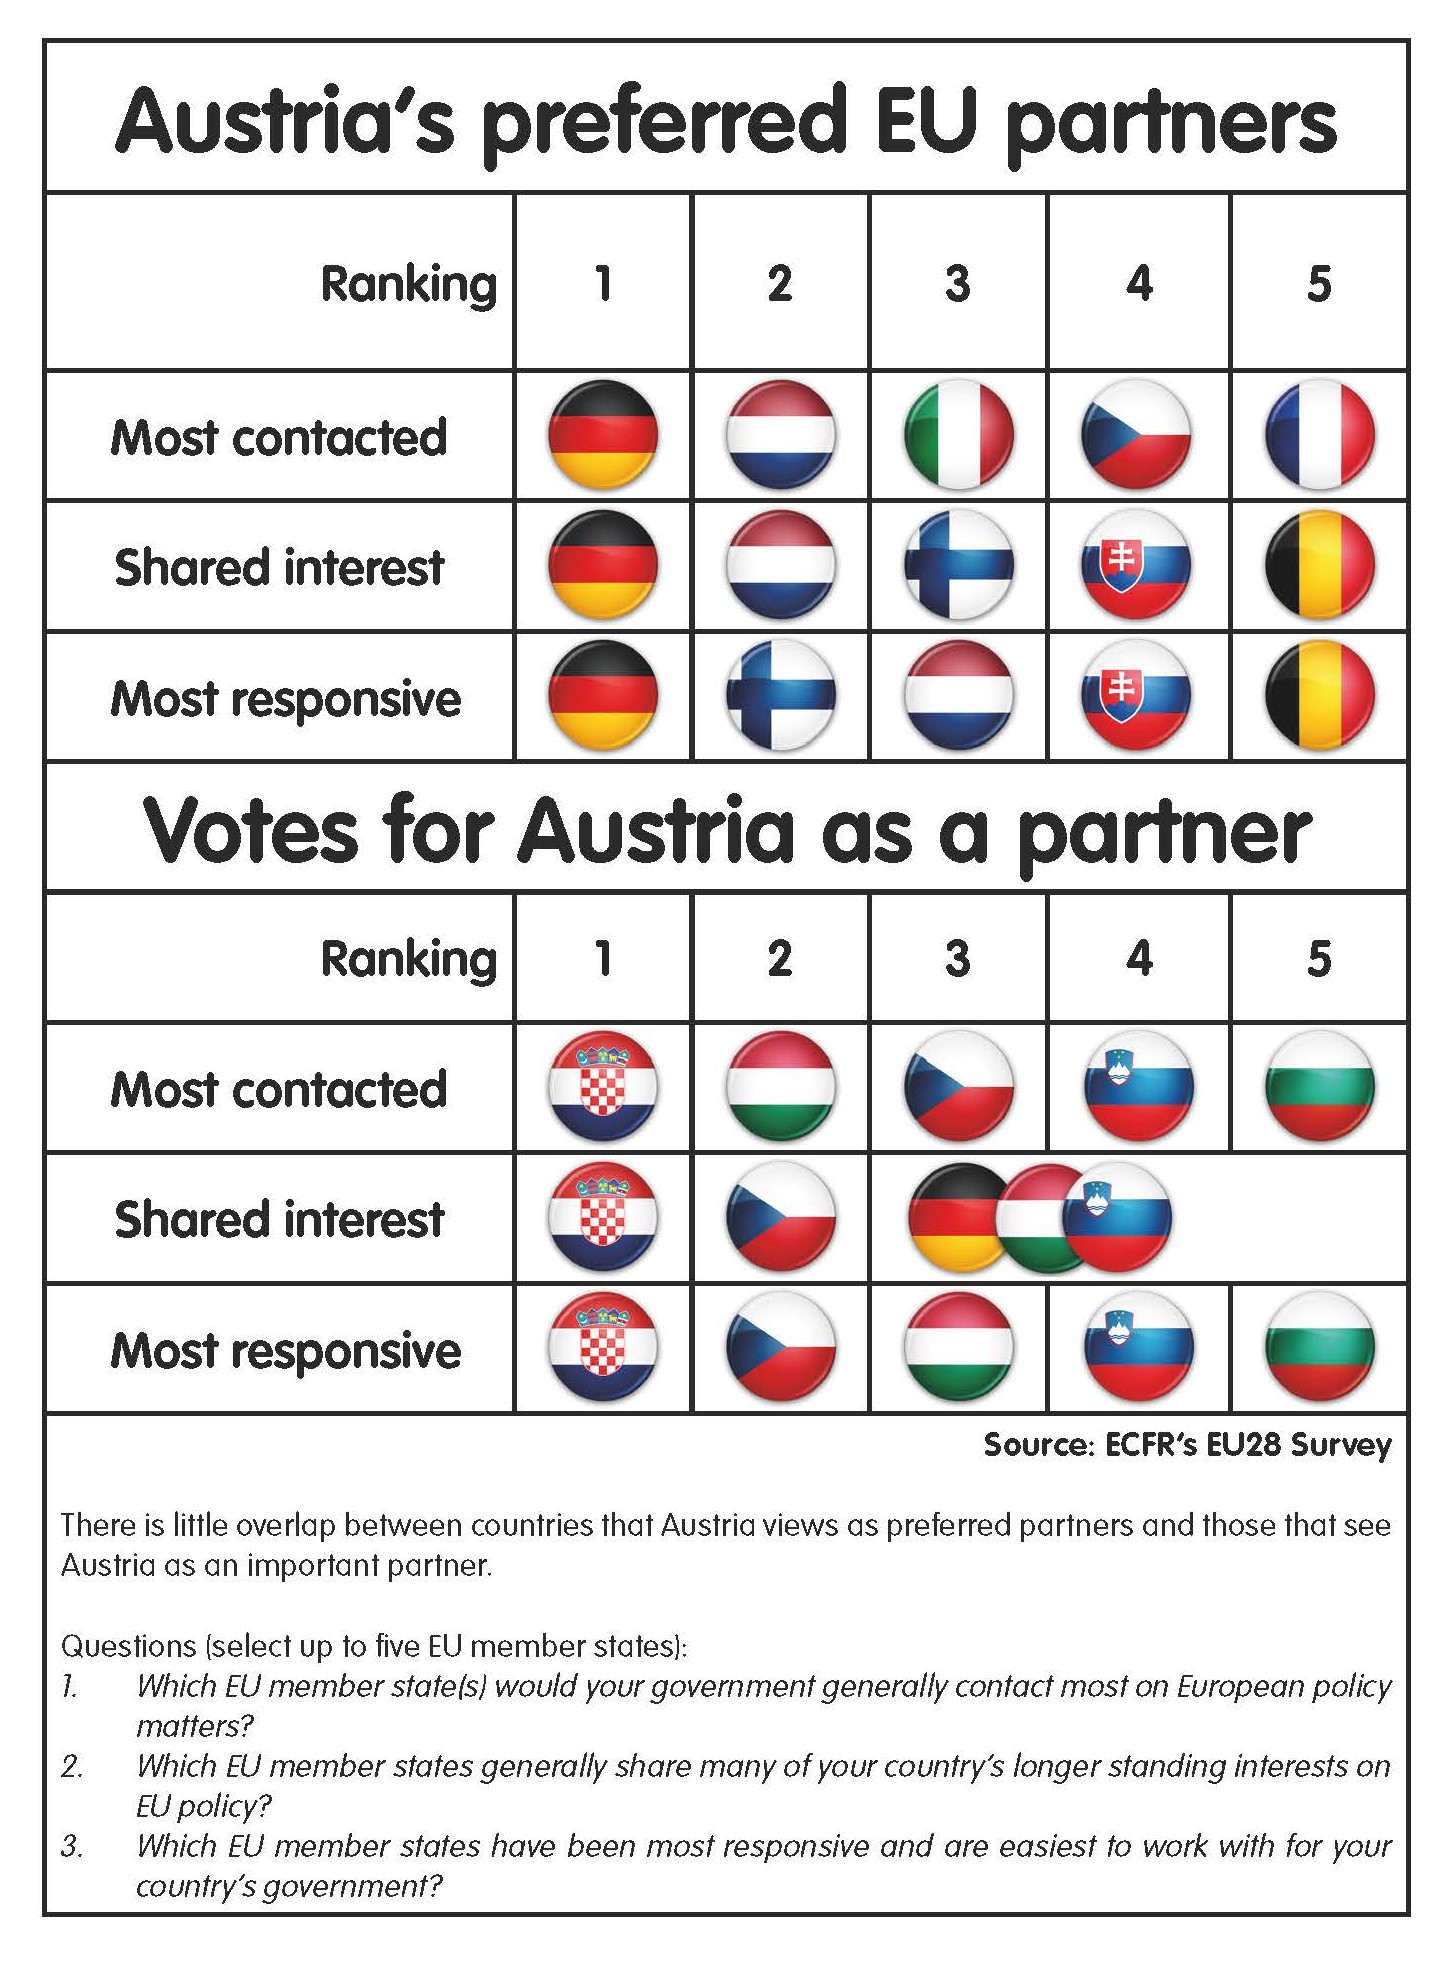 Table: Austria's preferred EU partners